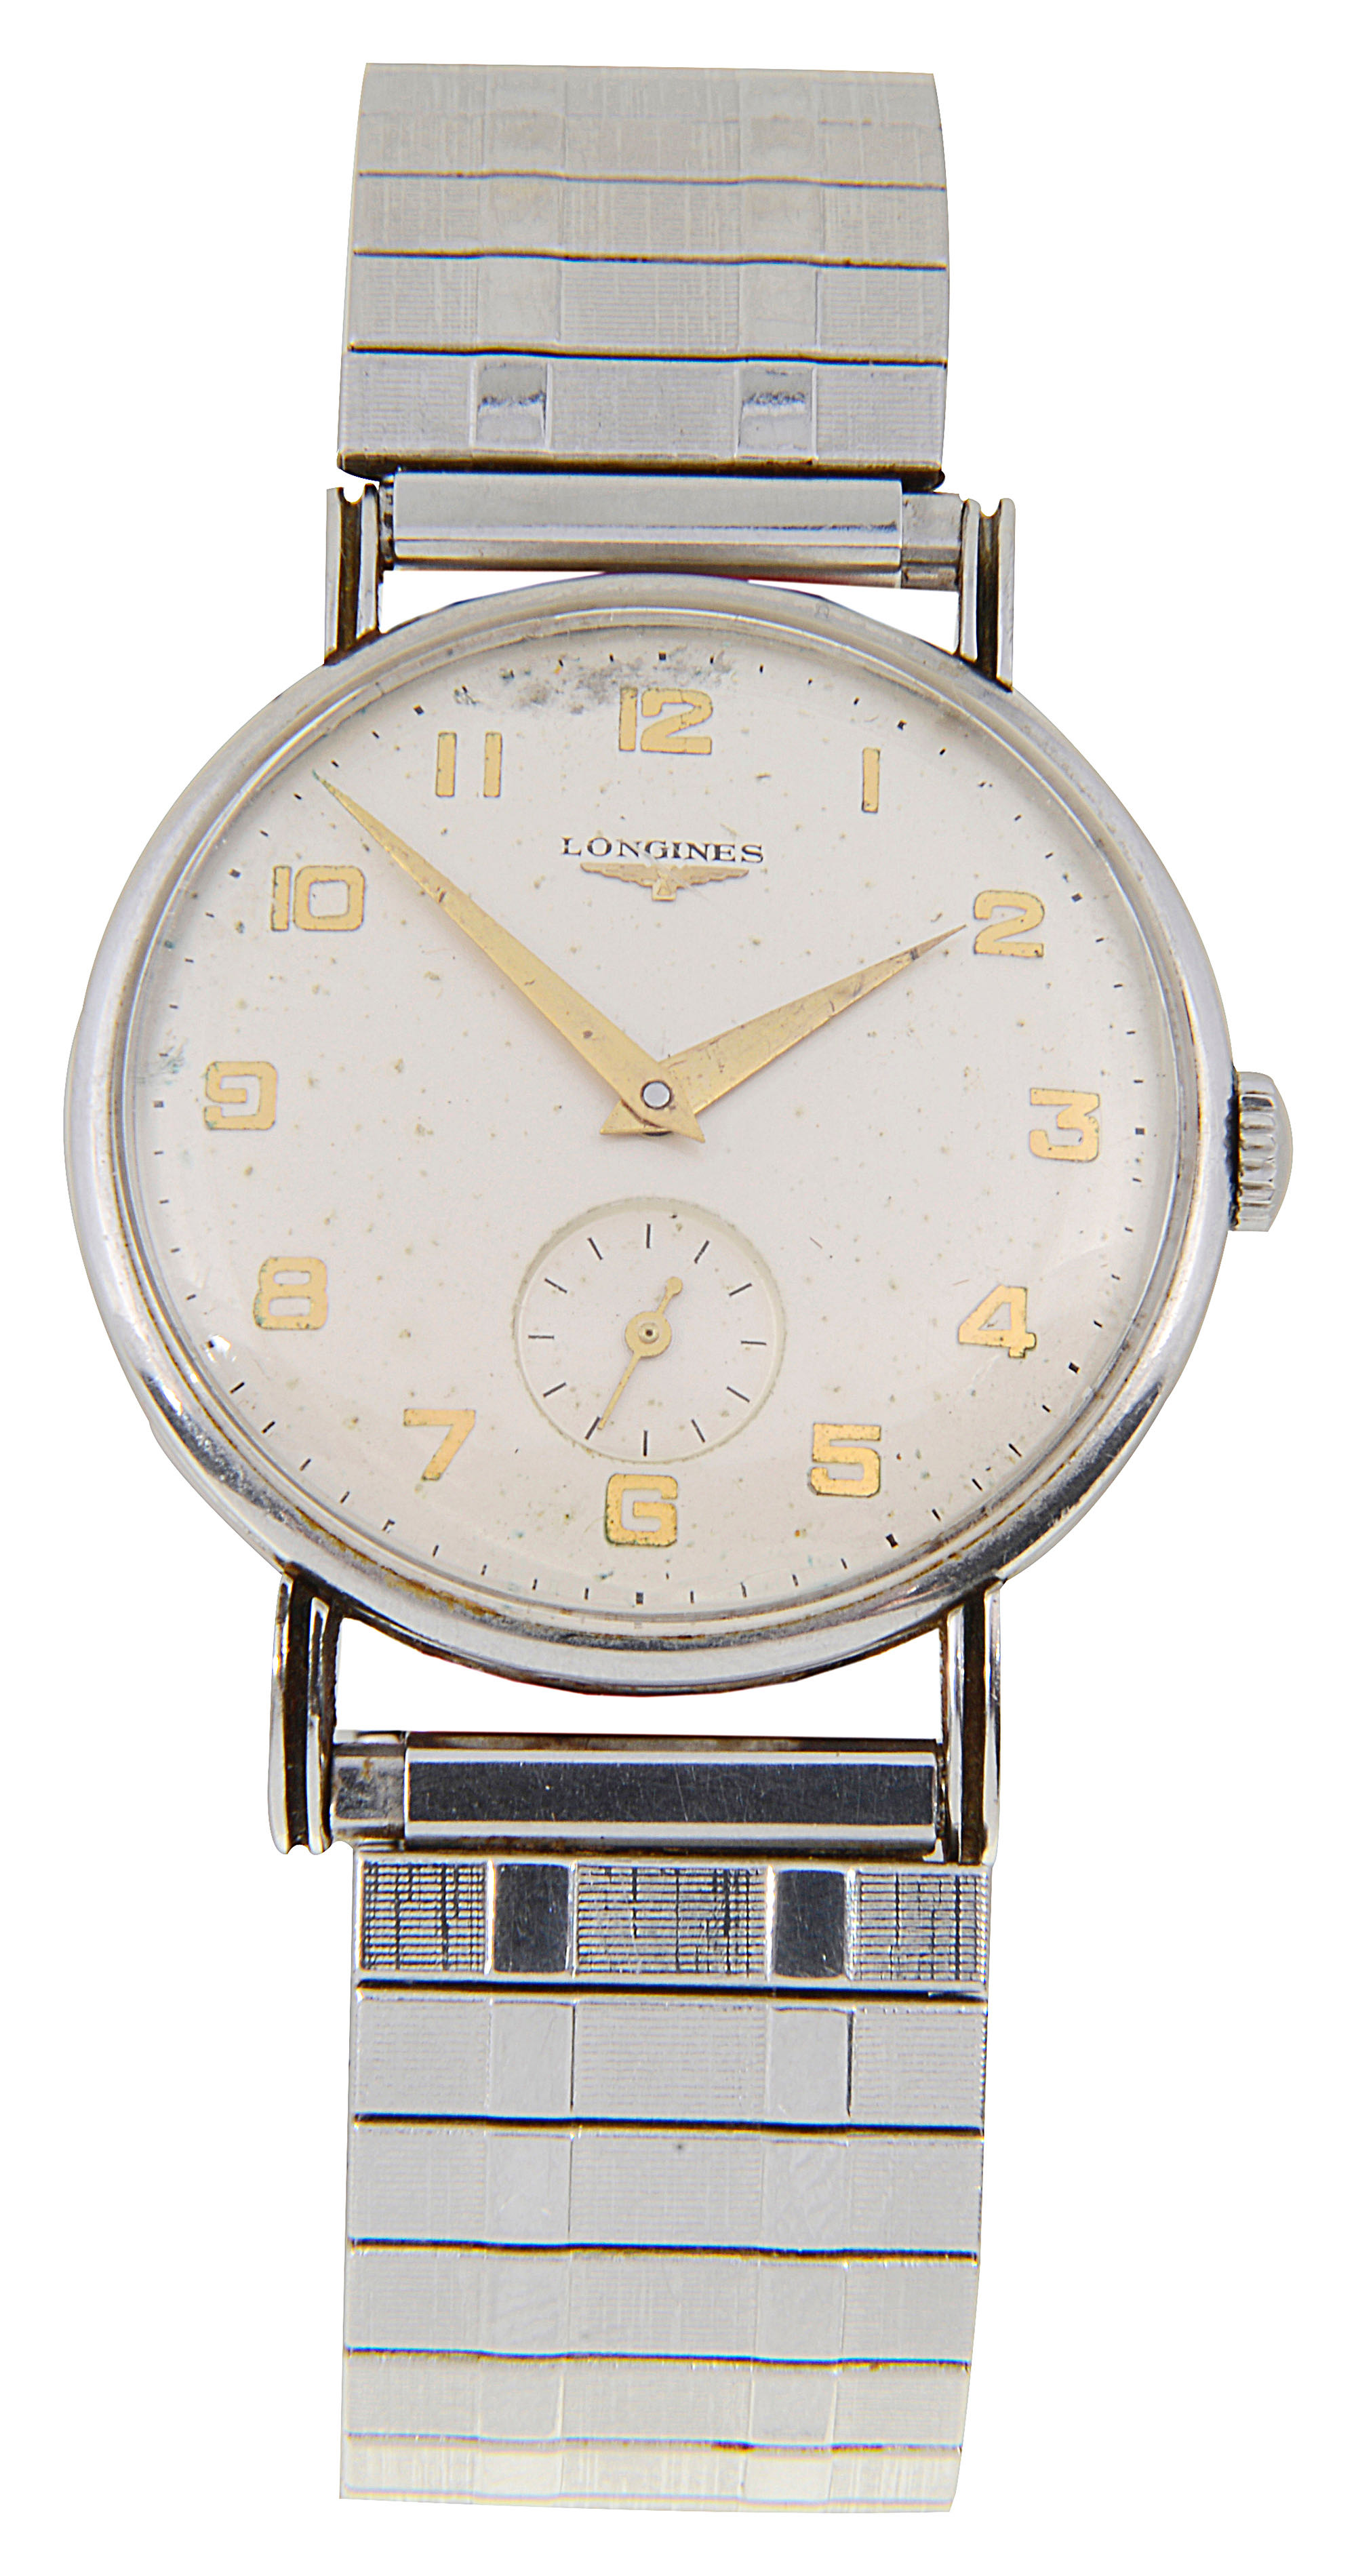 A Gentleman's Longines stainless steel wristwatch